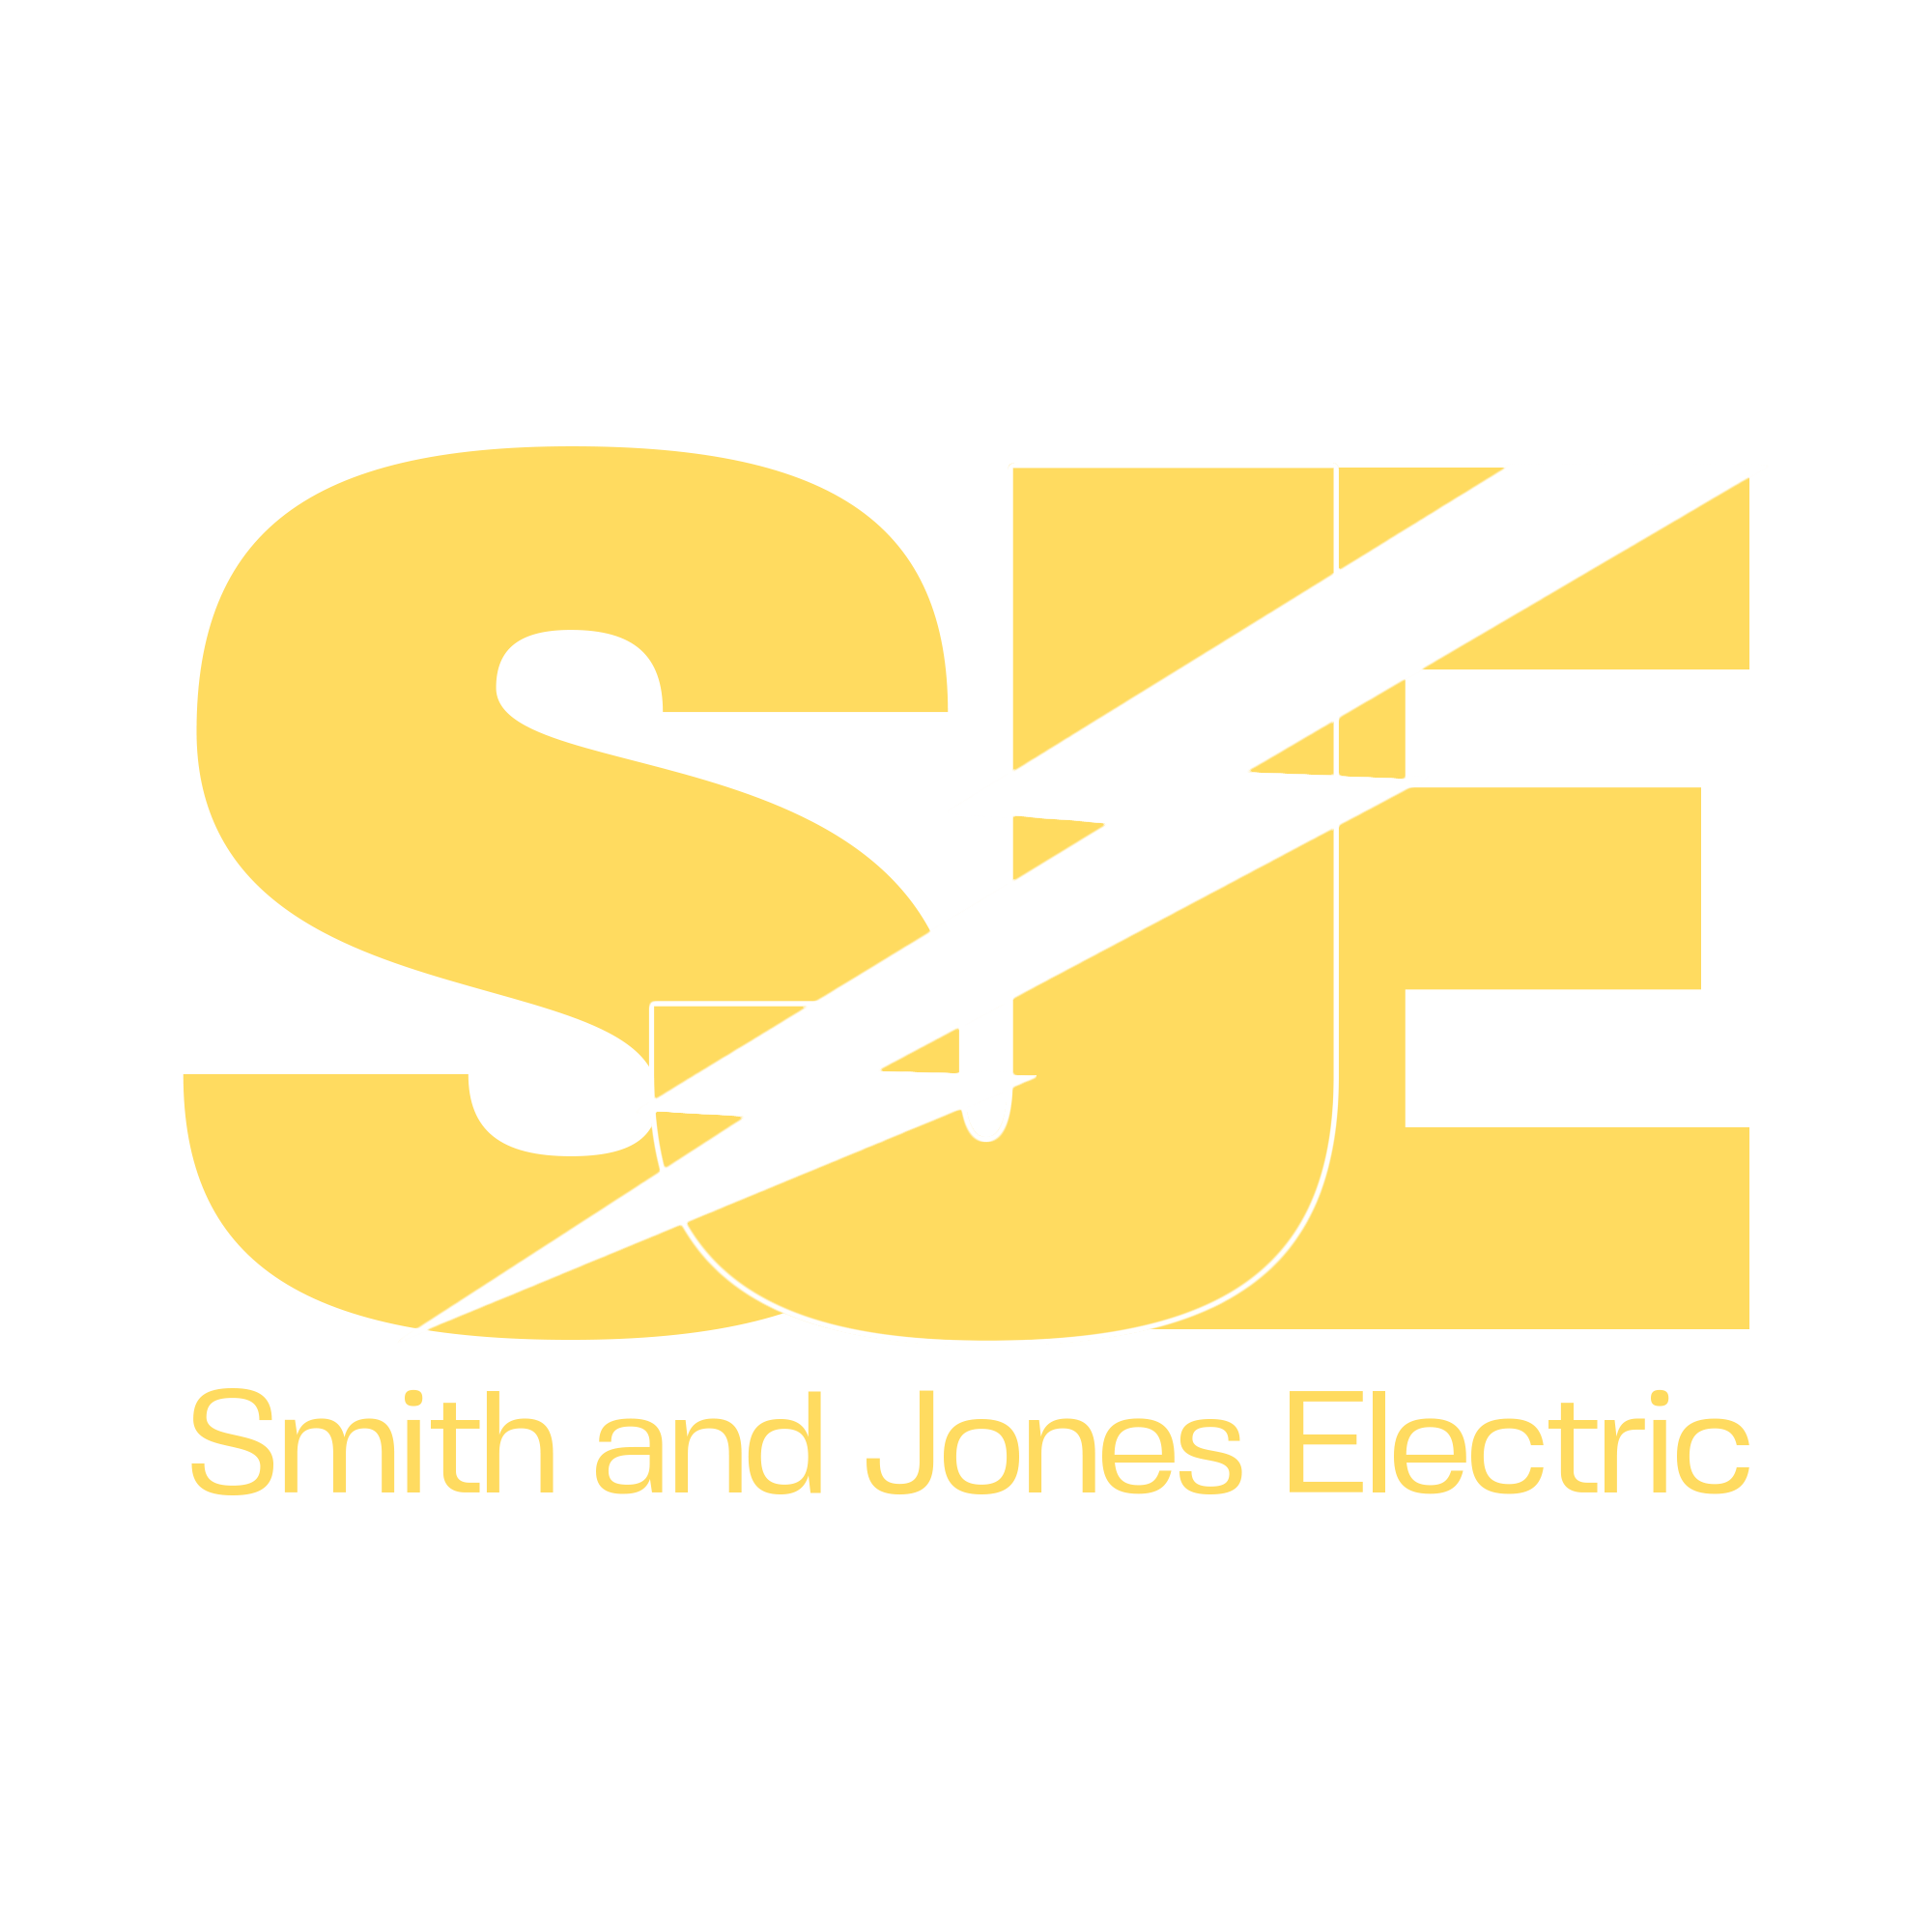 Smith and Jones Electric's Logo